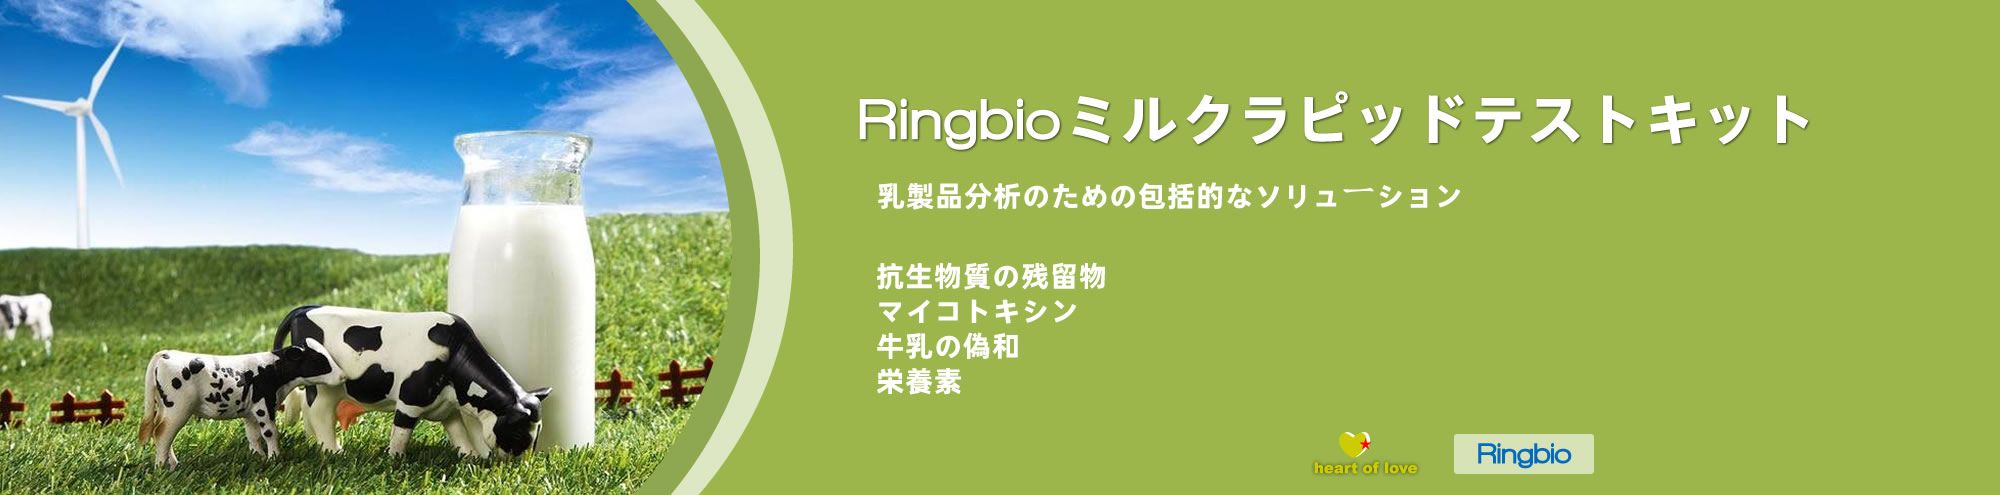 RINGBIOの包括的なデイリーミルクラピッドテストソリューション